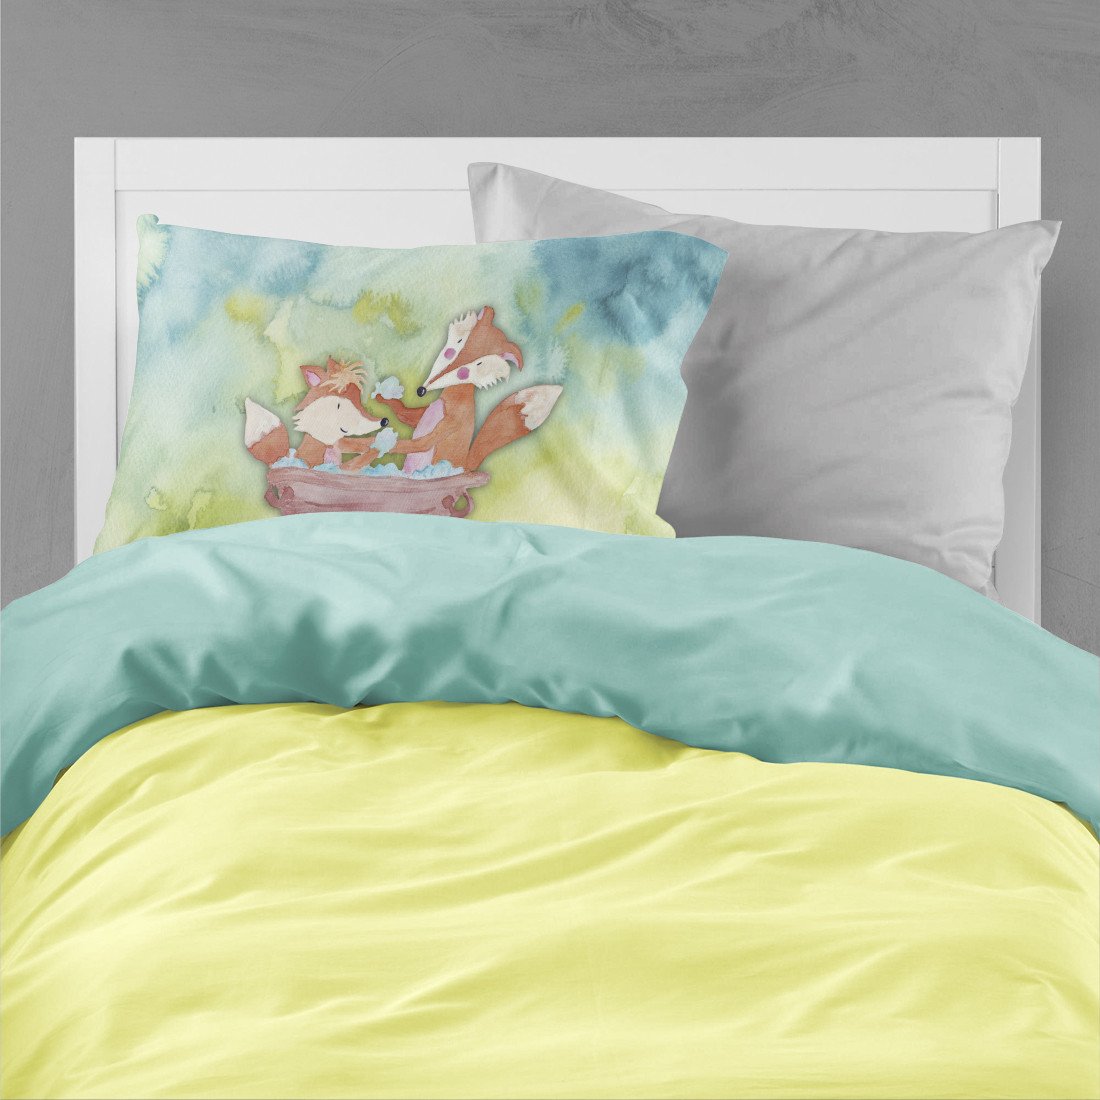 Foxes Bathing Watercolor Fabric Standard Pillowcase BB7350PILLOWCASE by Caroline's Treasures